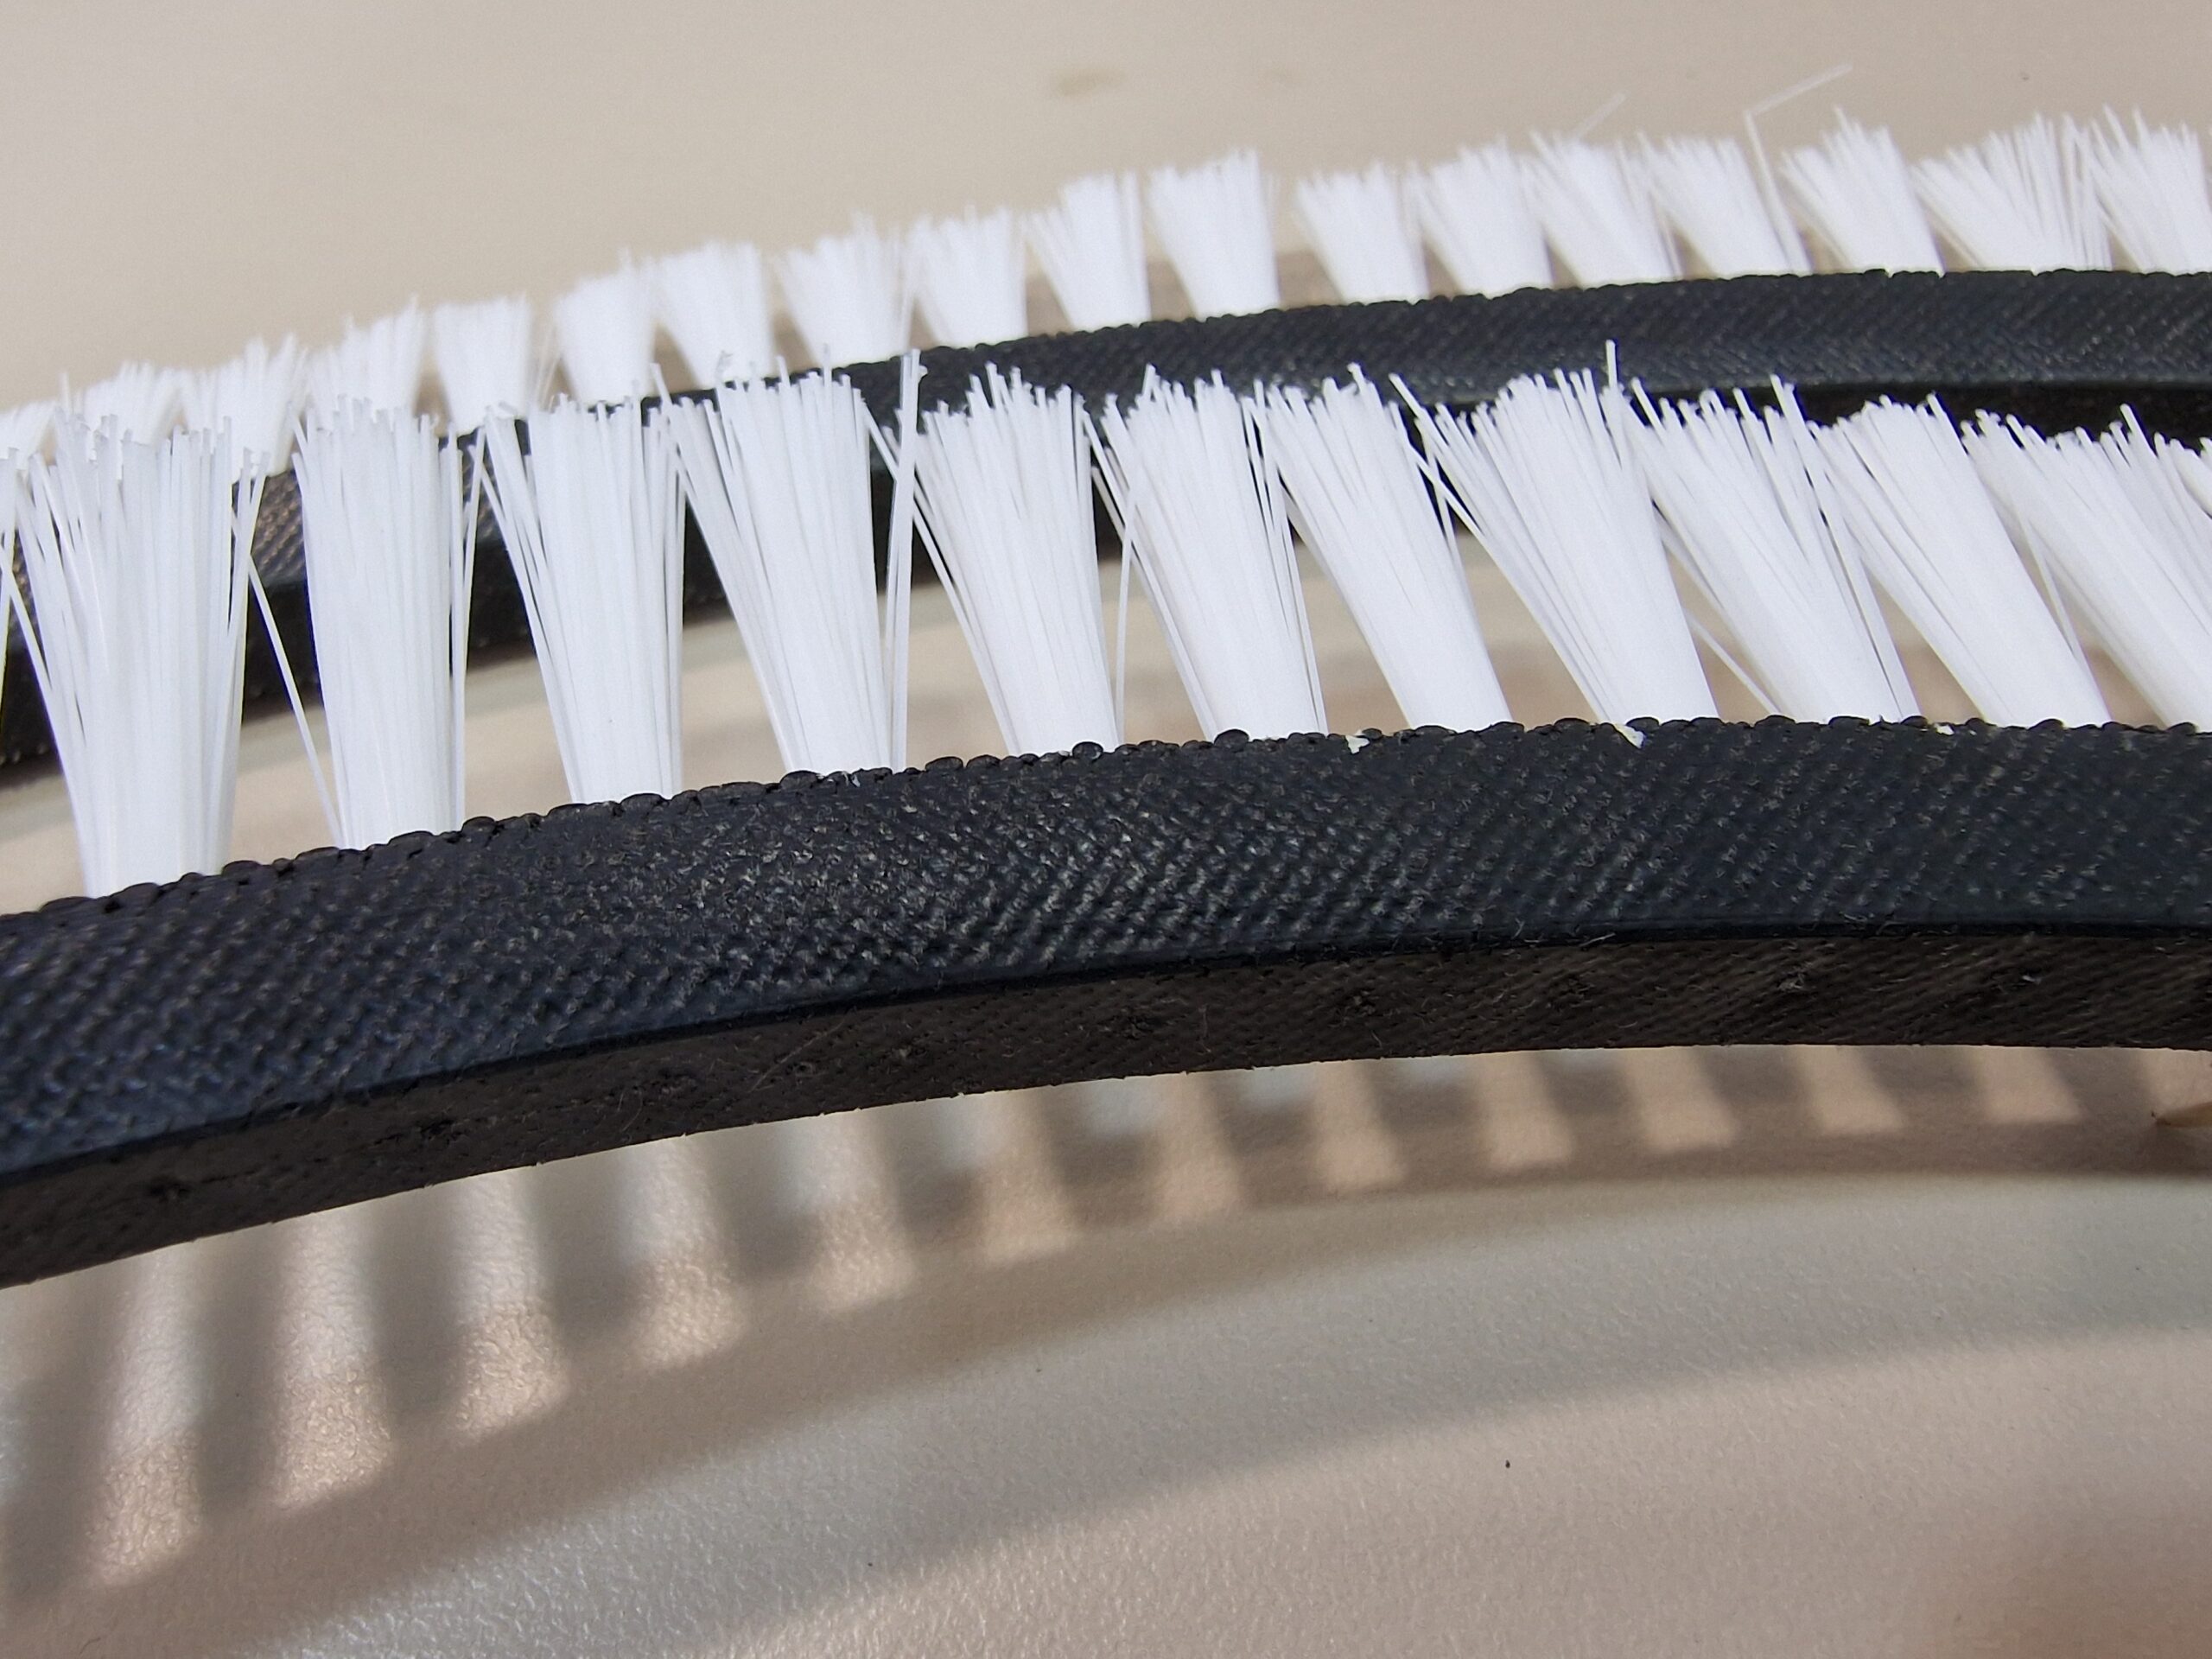 Trapezoidal drive belt brushes